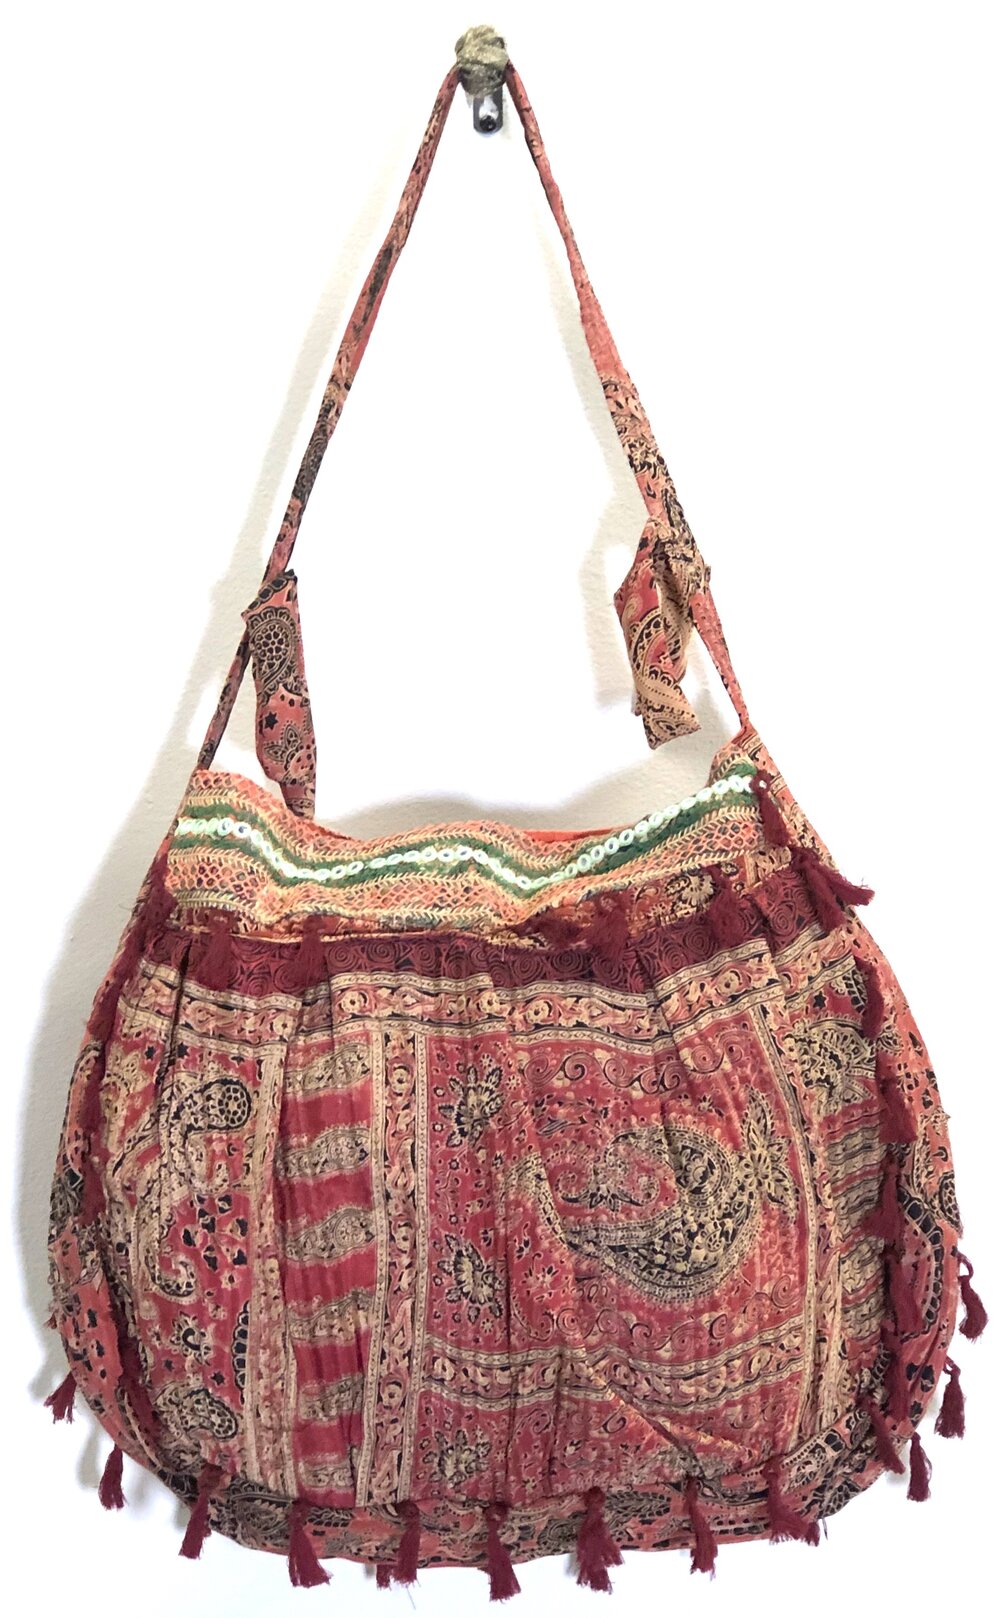 Sari Fabric Paisley Mirror work embroidery hand bag SHOULDER BAG Large bag  HOBO Bag w cotton tussles Tribal bag Bohemian Hippie Boho style — Colors by